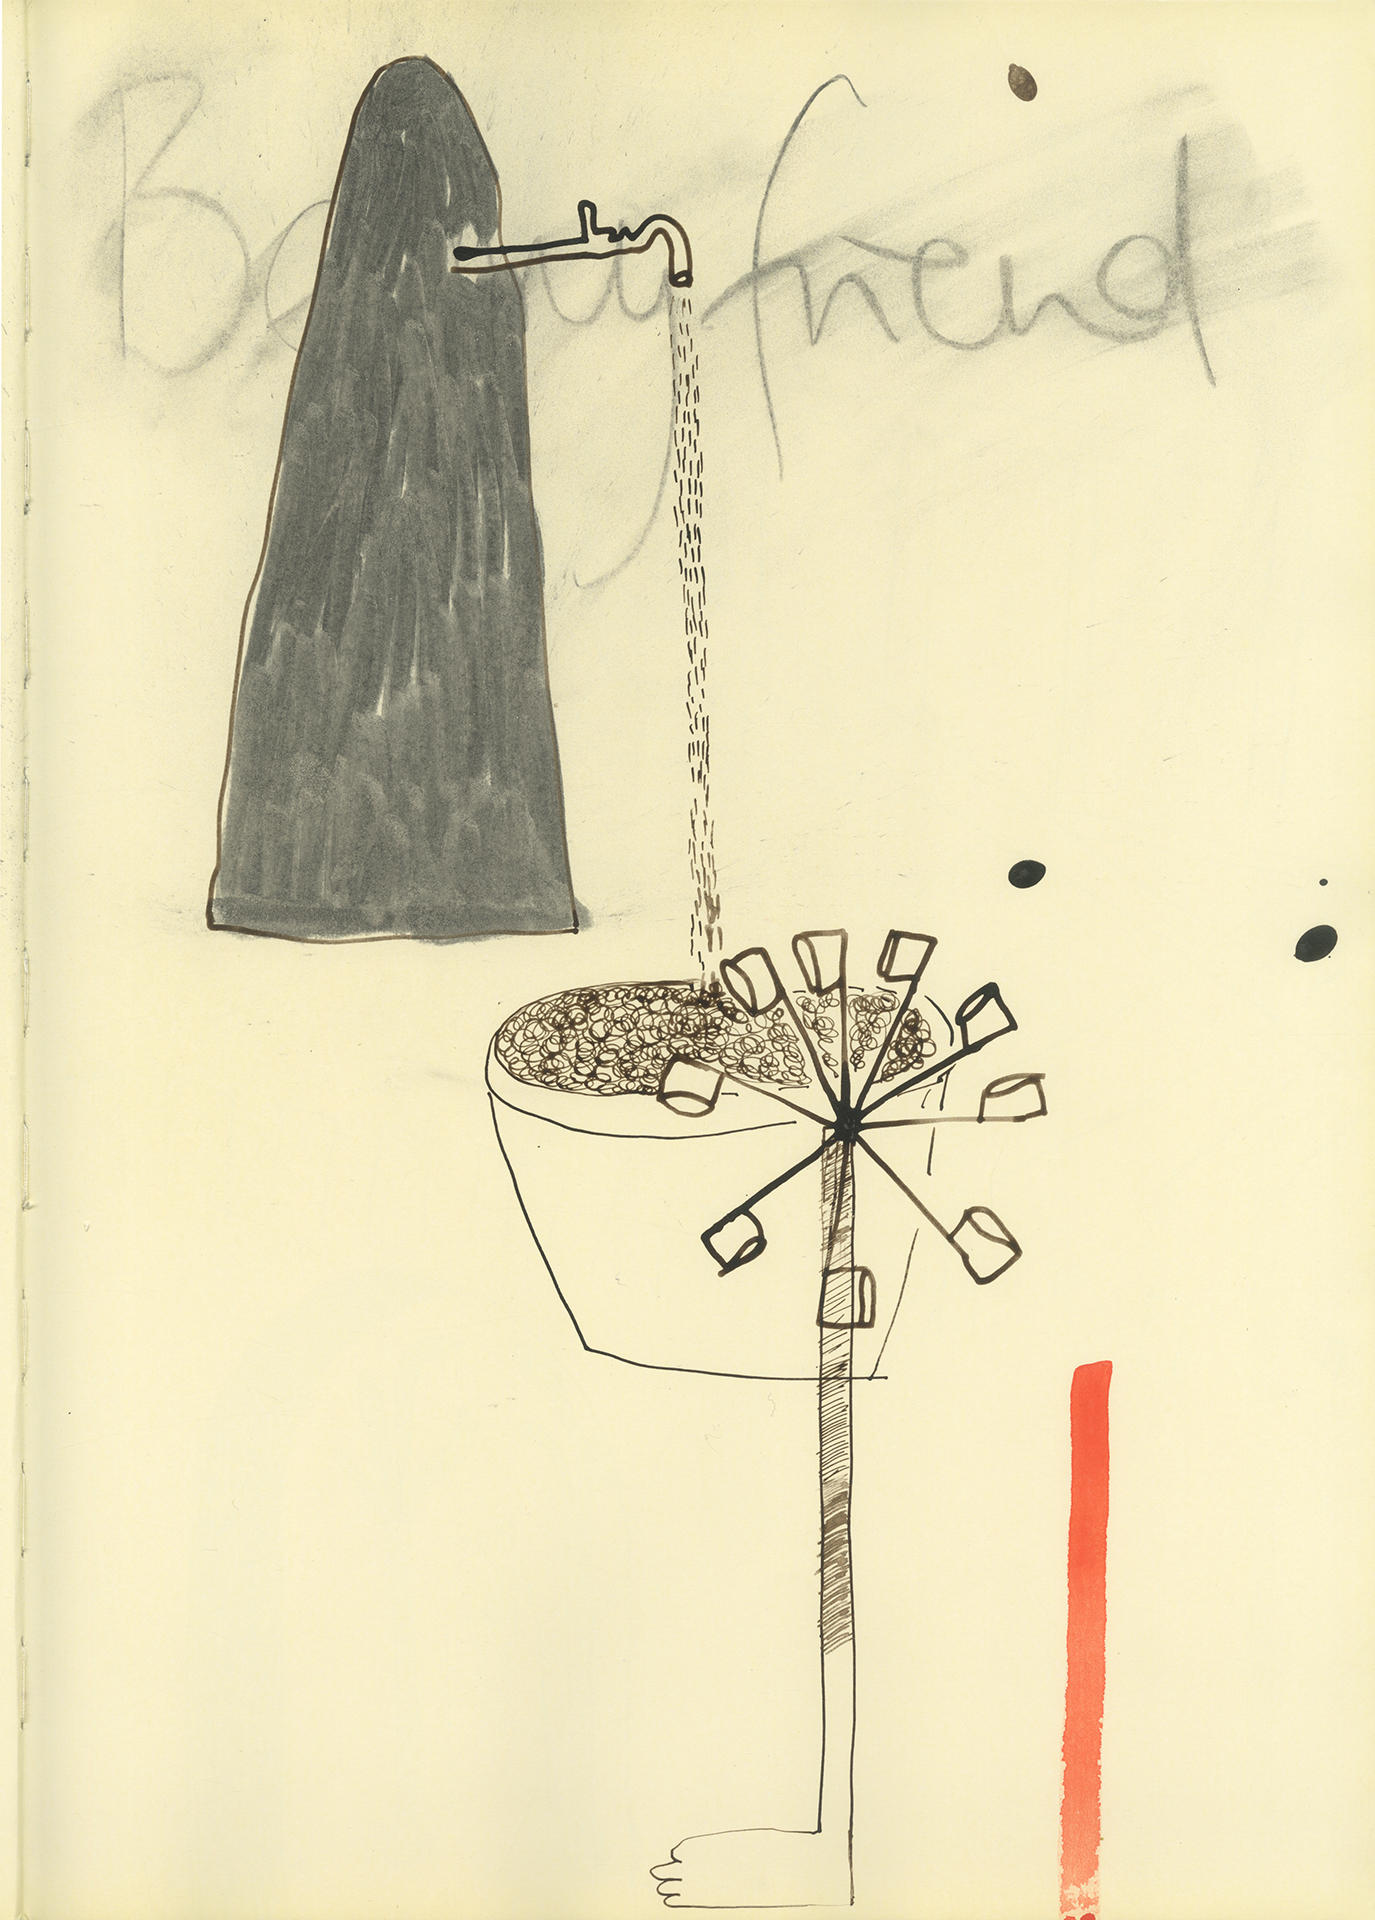 Bharti Kher, Untitled, 2013, mixed media on paper, 42cm x 30cm